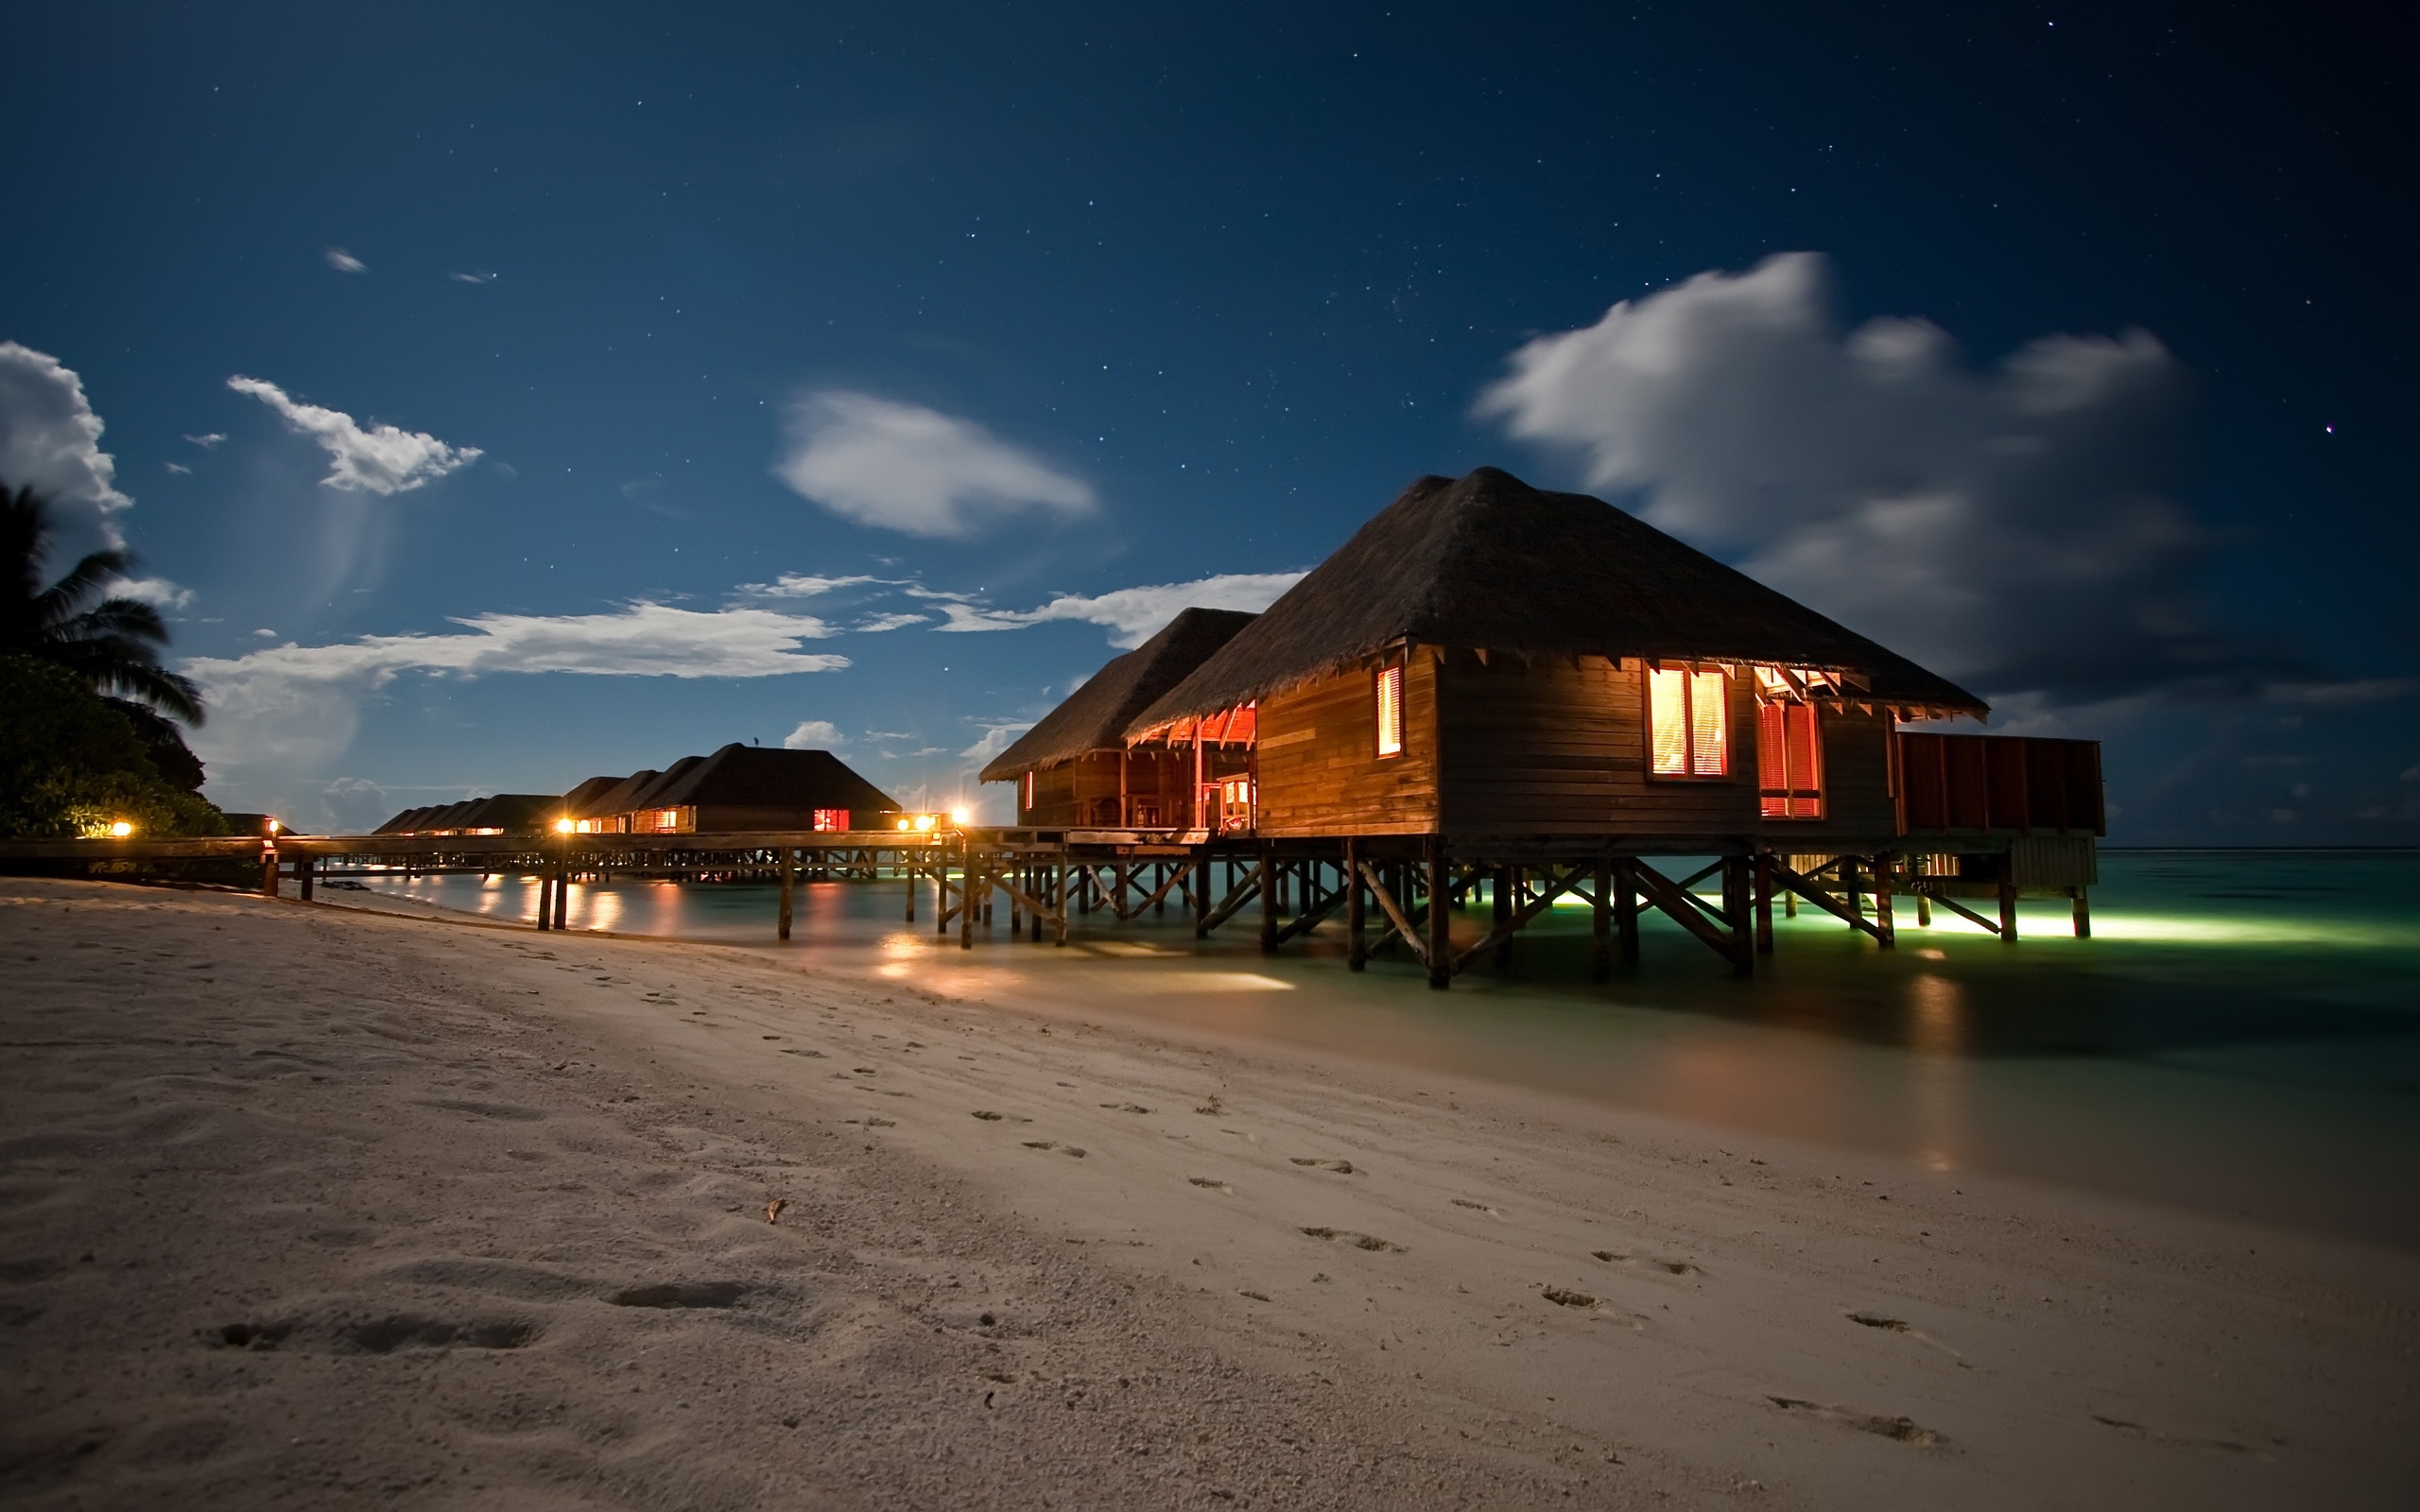 Amazing Night Beach Landscape for 2560 x 1600 widescreen resolution